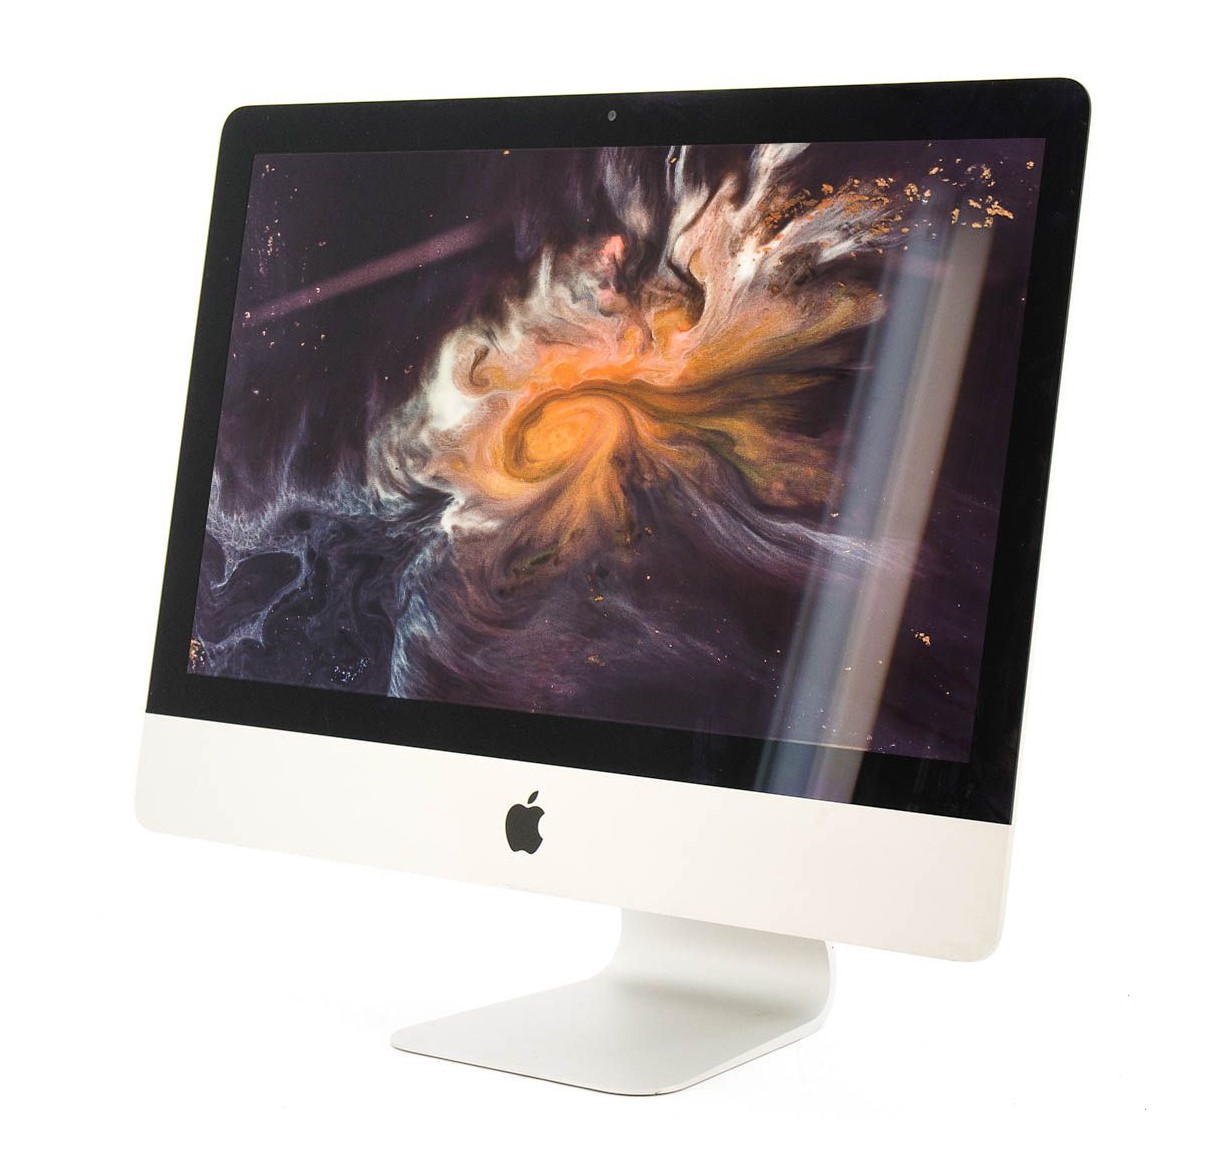  آل این وان اپل مدل iMac A1418 سایز 22 اینچی همراه با ماوس و کیبورد اصلی